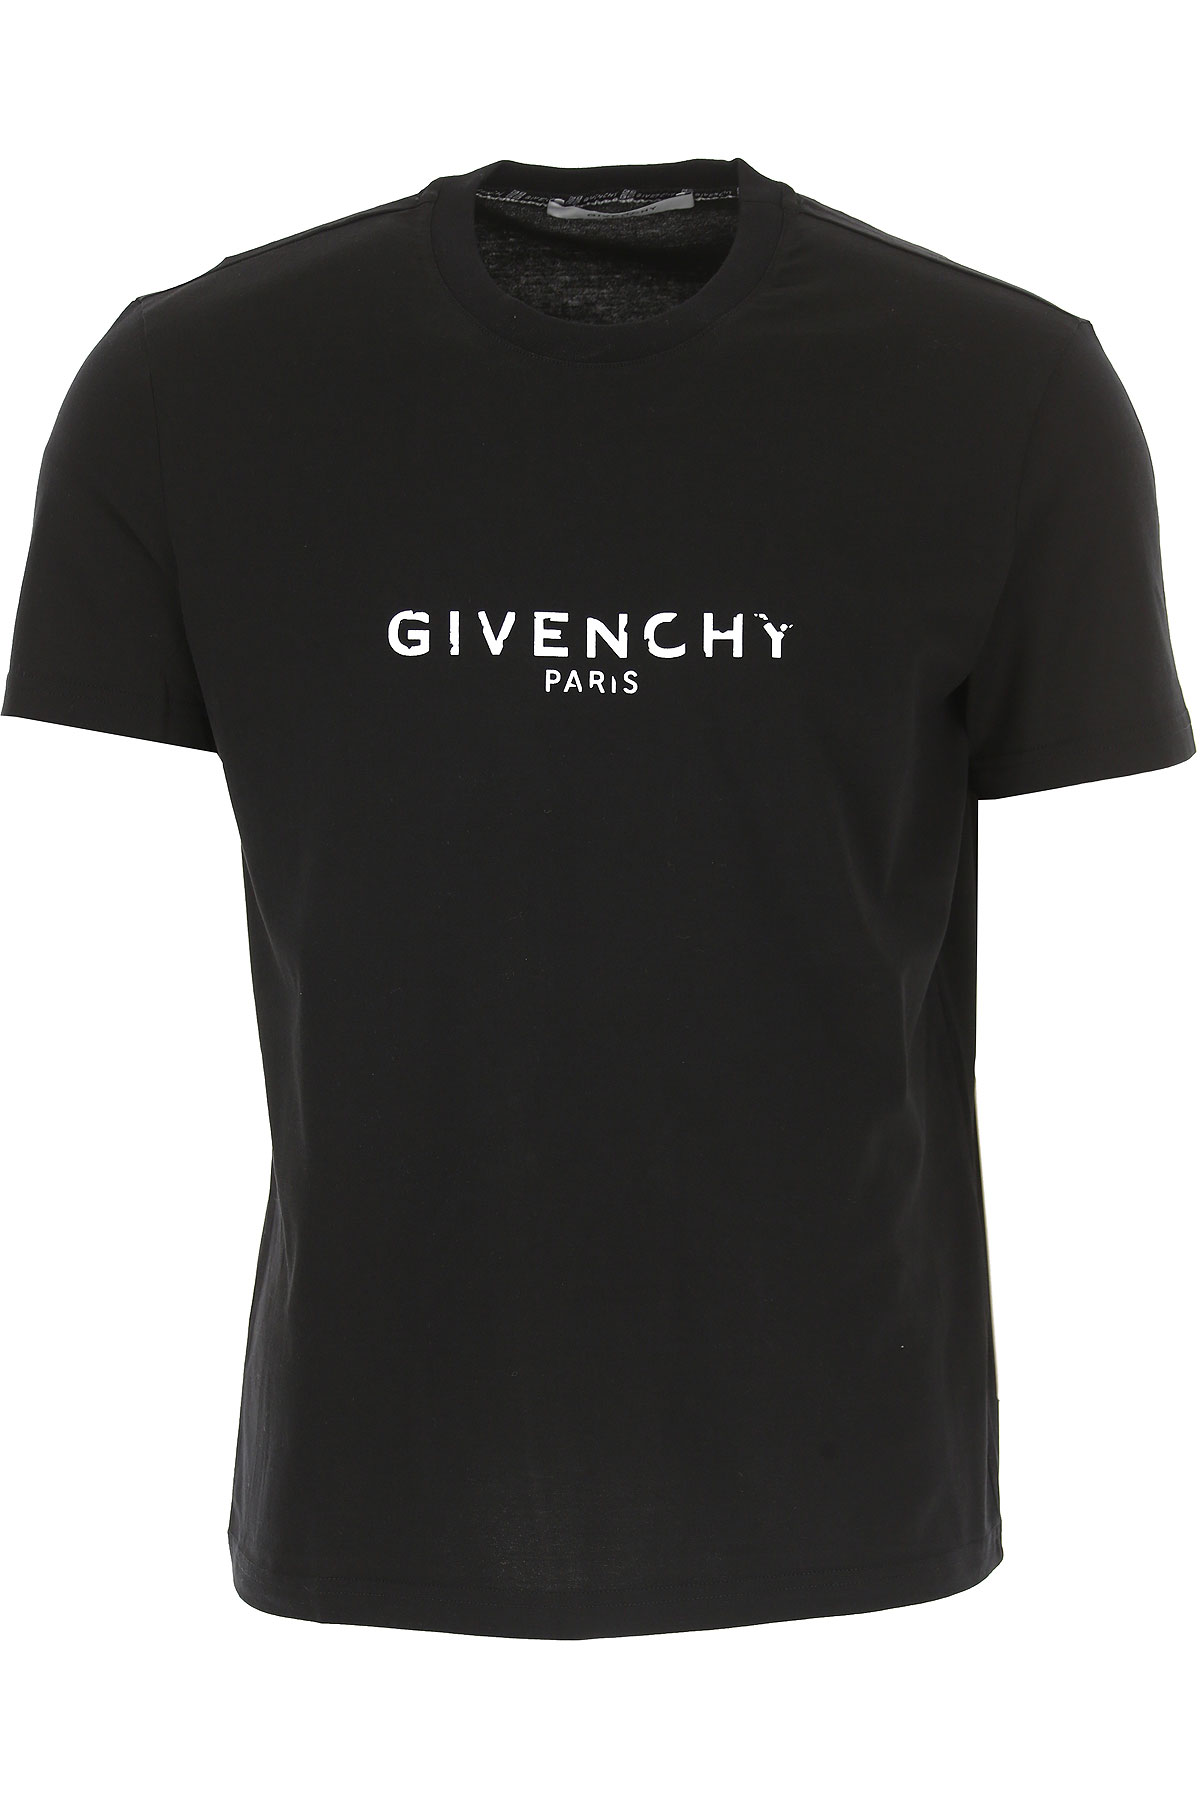 Mens Clothing Givenchy, Style code: bm70k93002-001-